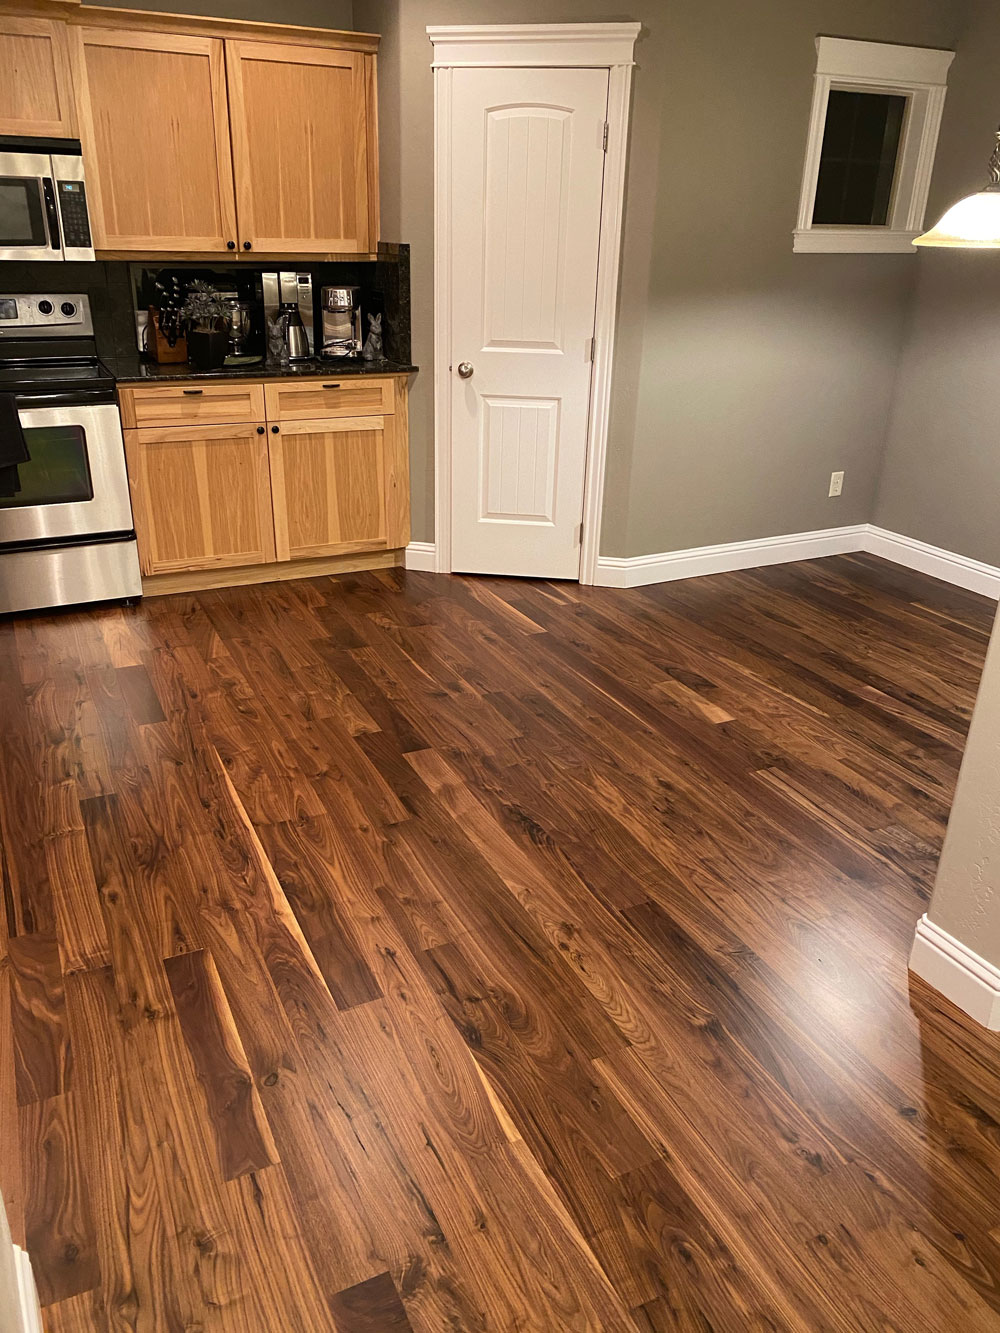 dark walnut hardwood floors in kitchen